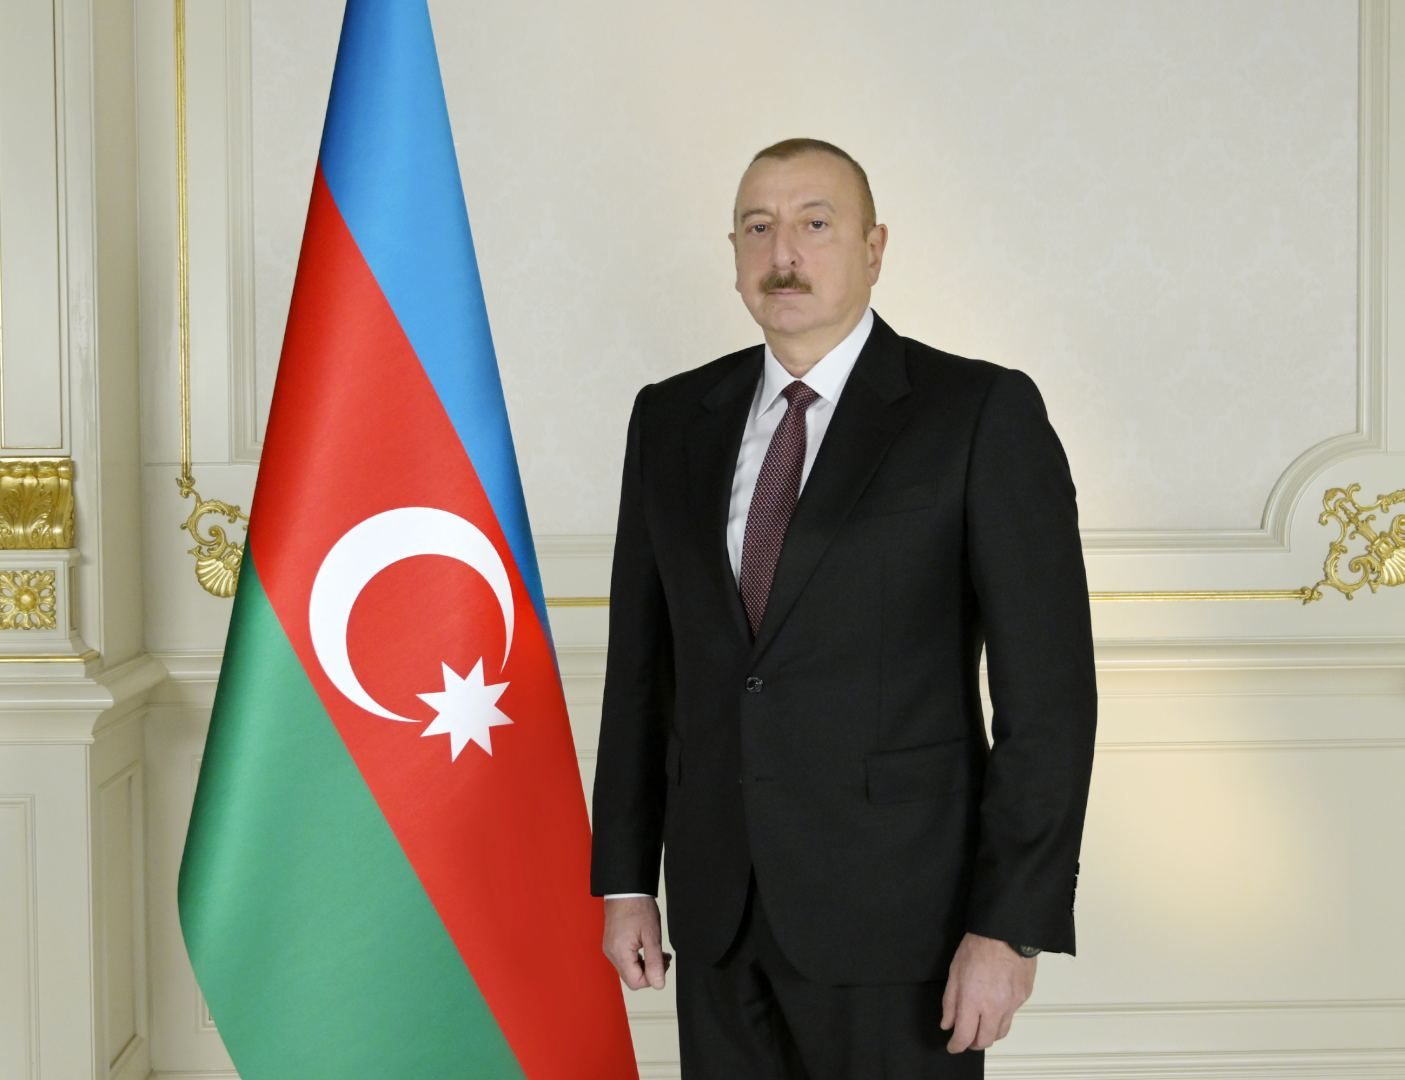 President Ilham Aliyev expresses condolences to Azerbaijani people, families and relatives of fallen servicemen